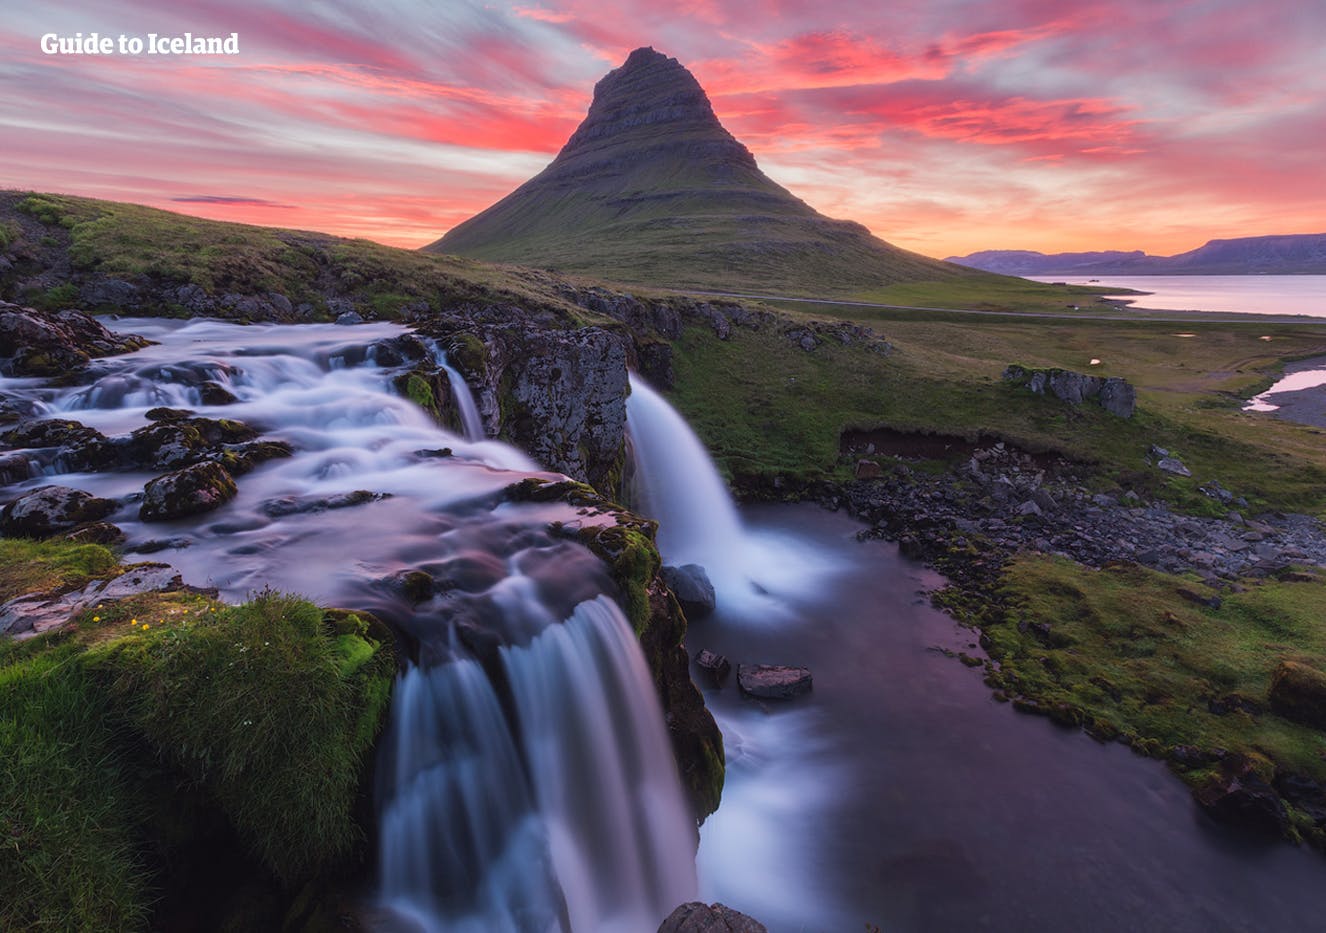 Det pilspissformede fjellet Kirkjufell på Snæfellsnes belyst av midnattssolens stråler.